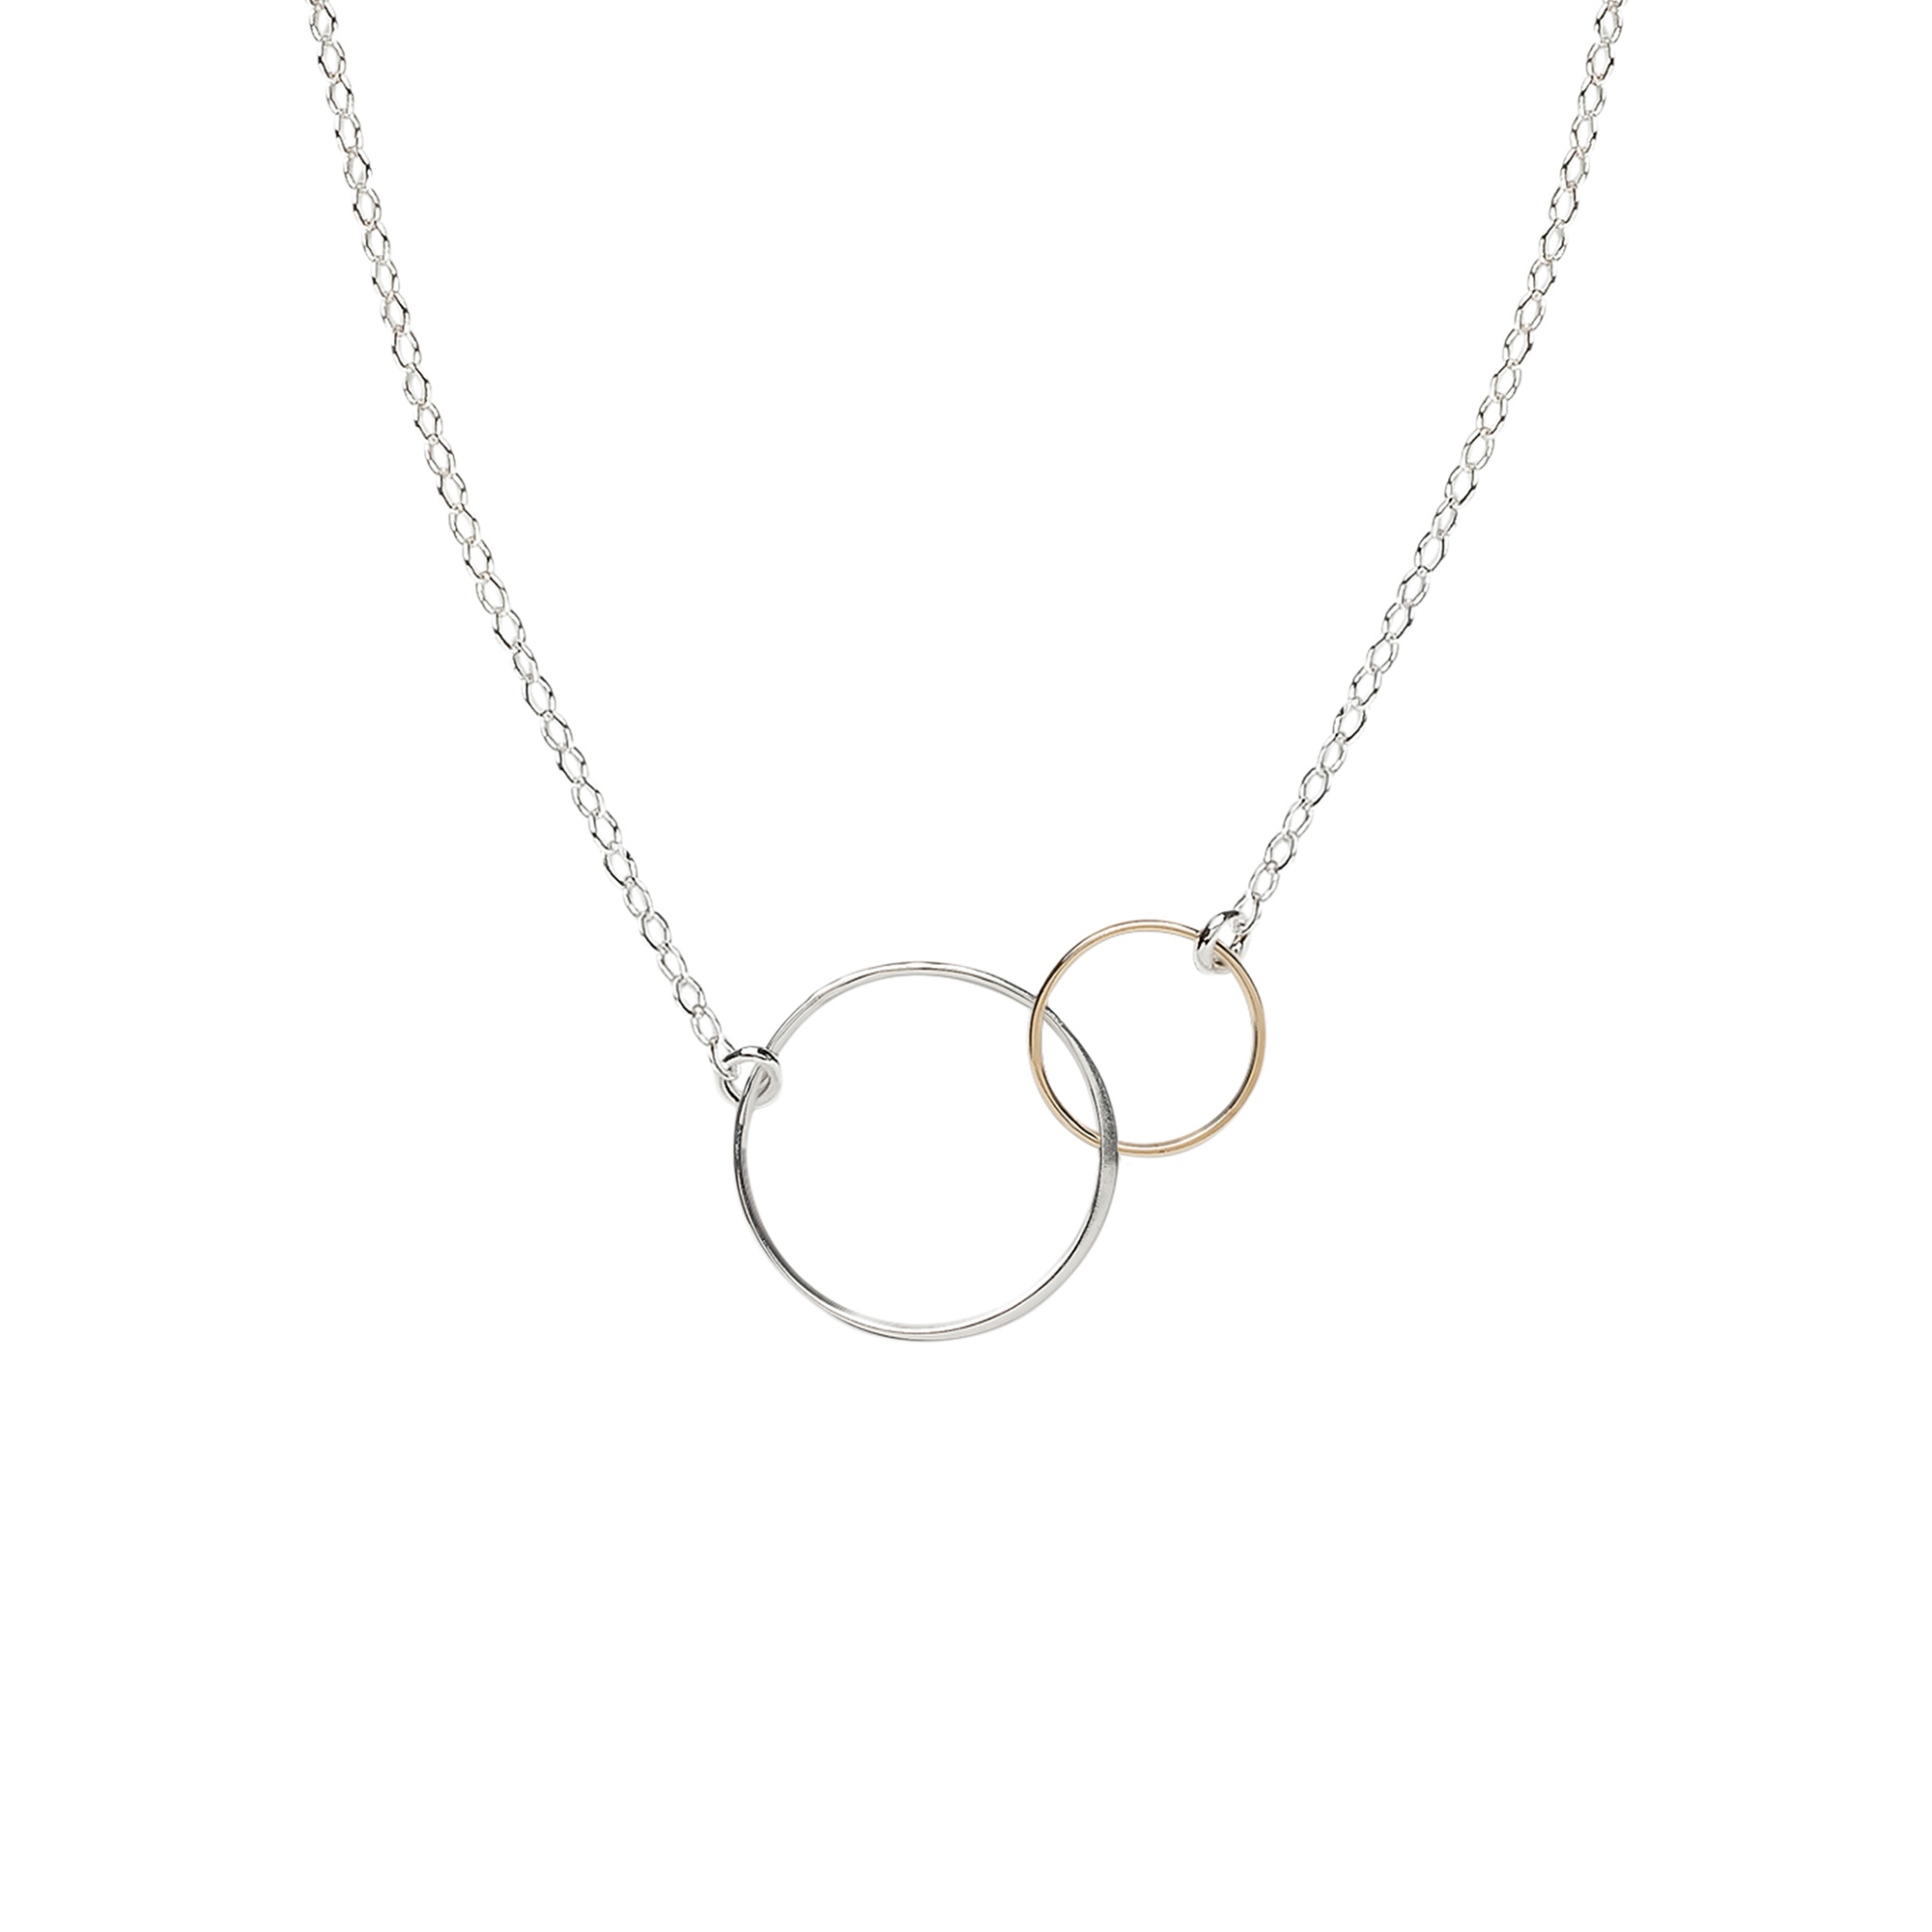 Cynthia Mini Linked Gold & Silver Circle Necklace